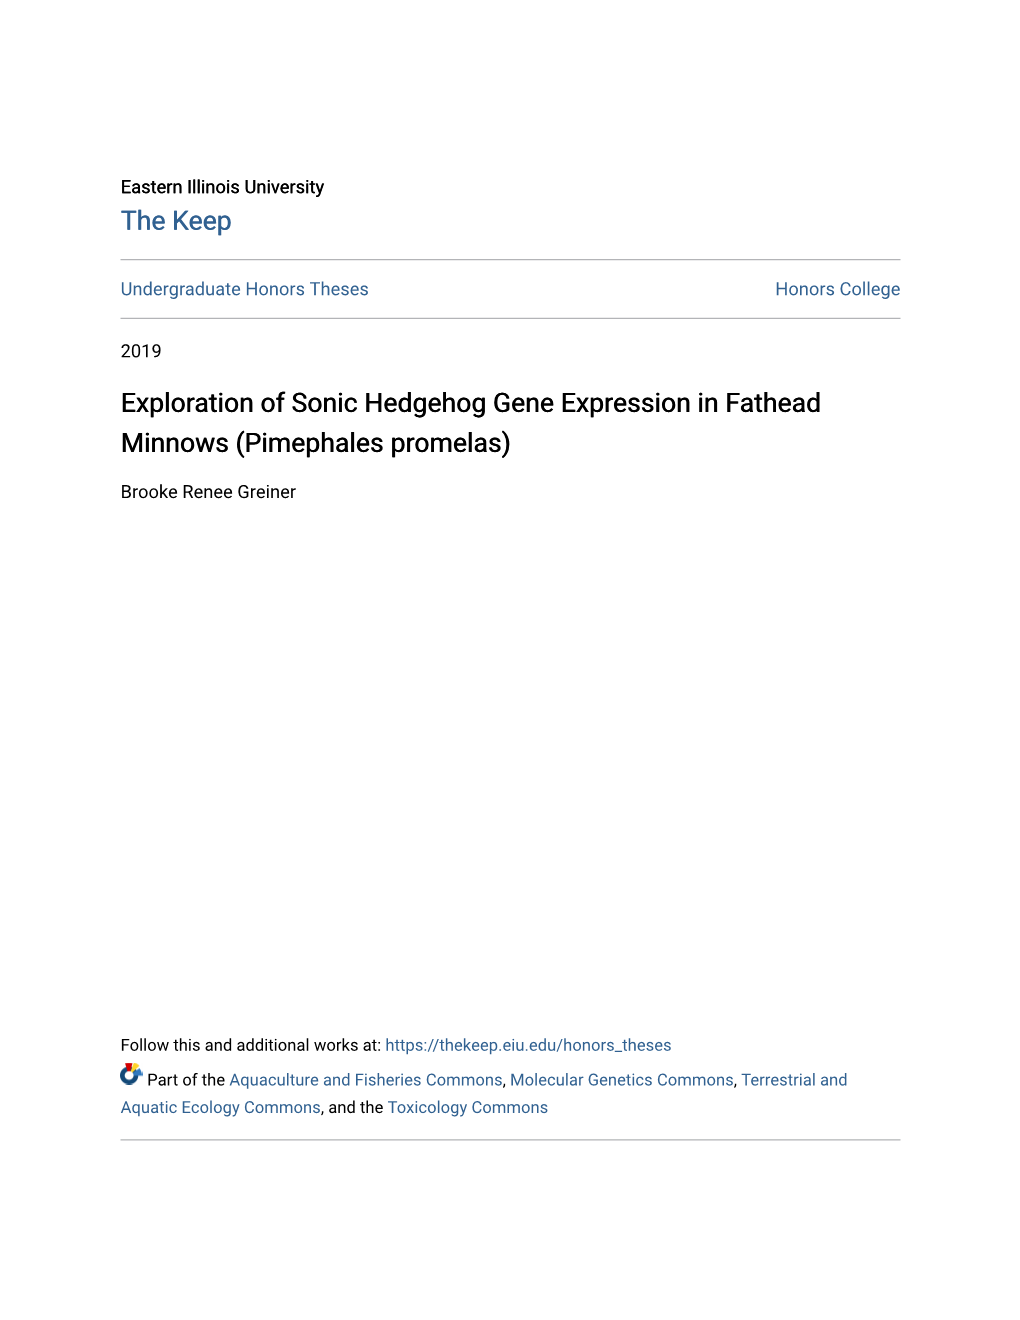 Exploration of Sonic Hedgehog Gene Expression in Fathead Minnows (Pimephales Promelas)